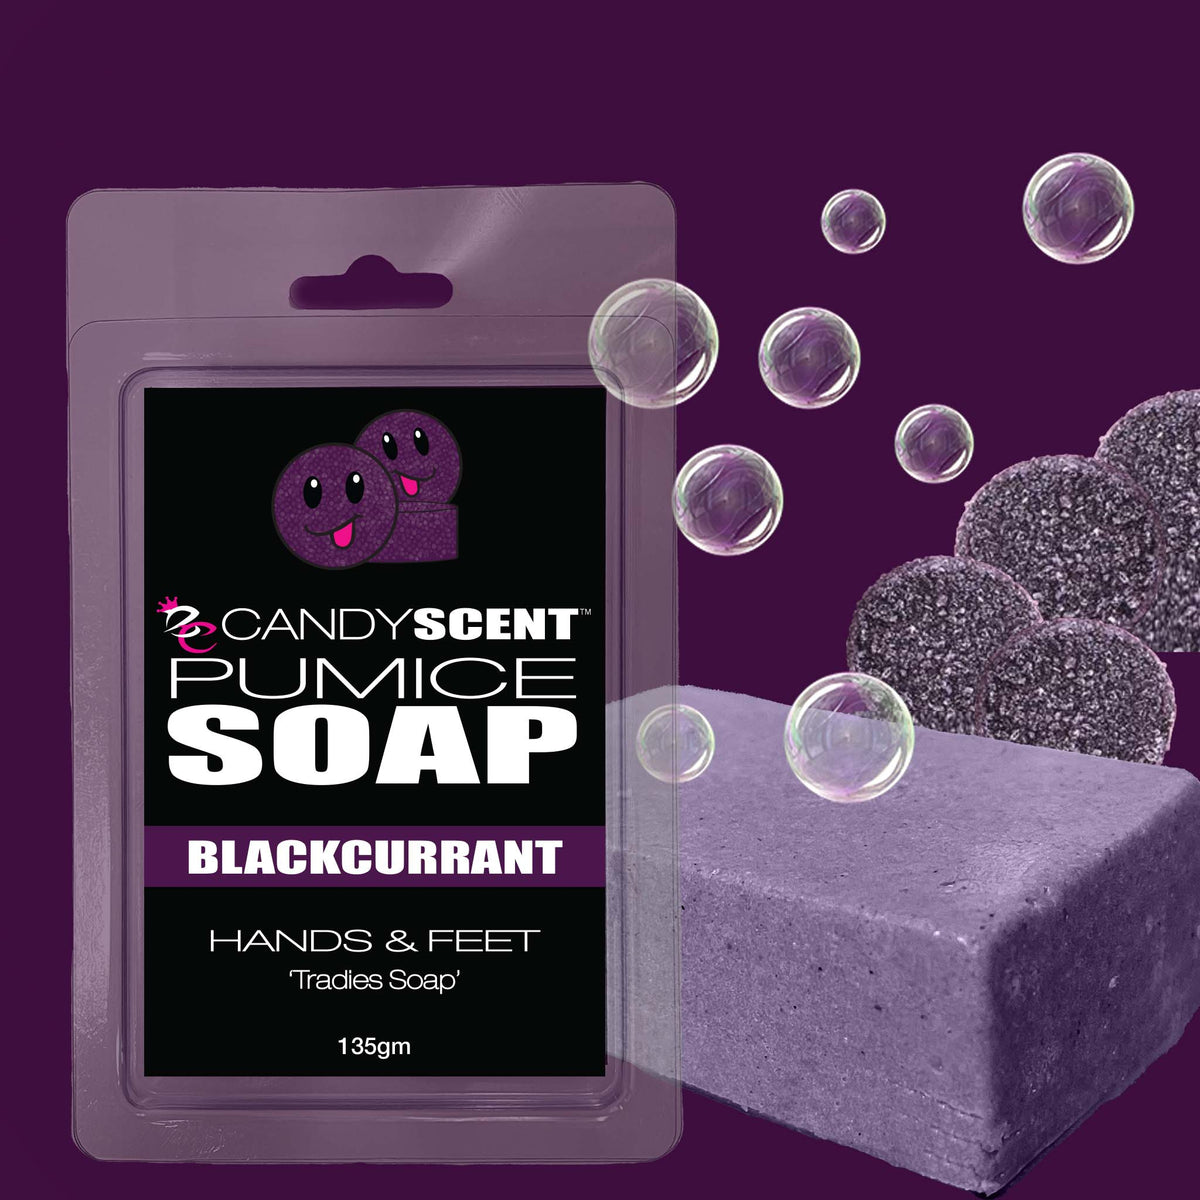 BLACKCURRANT Pumice Soap